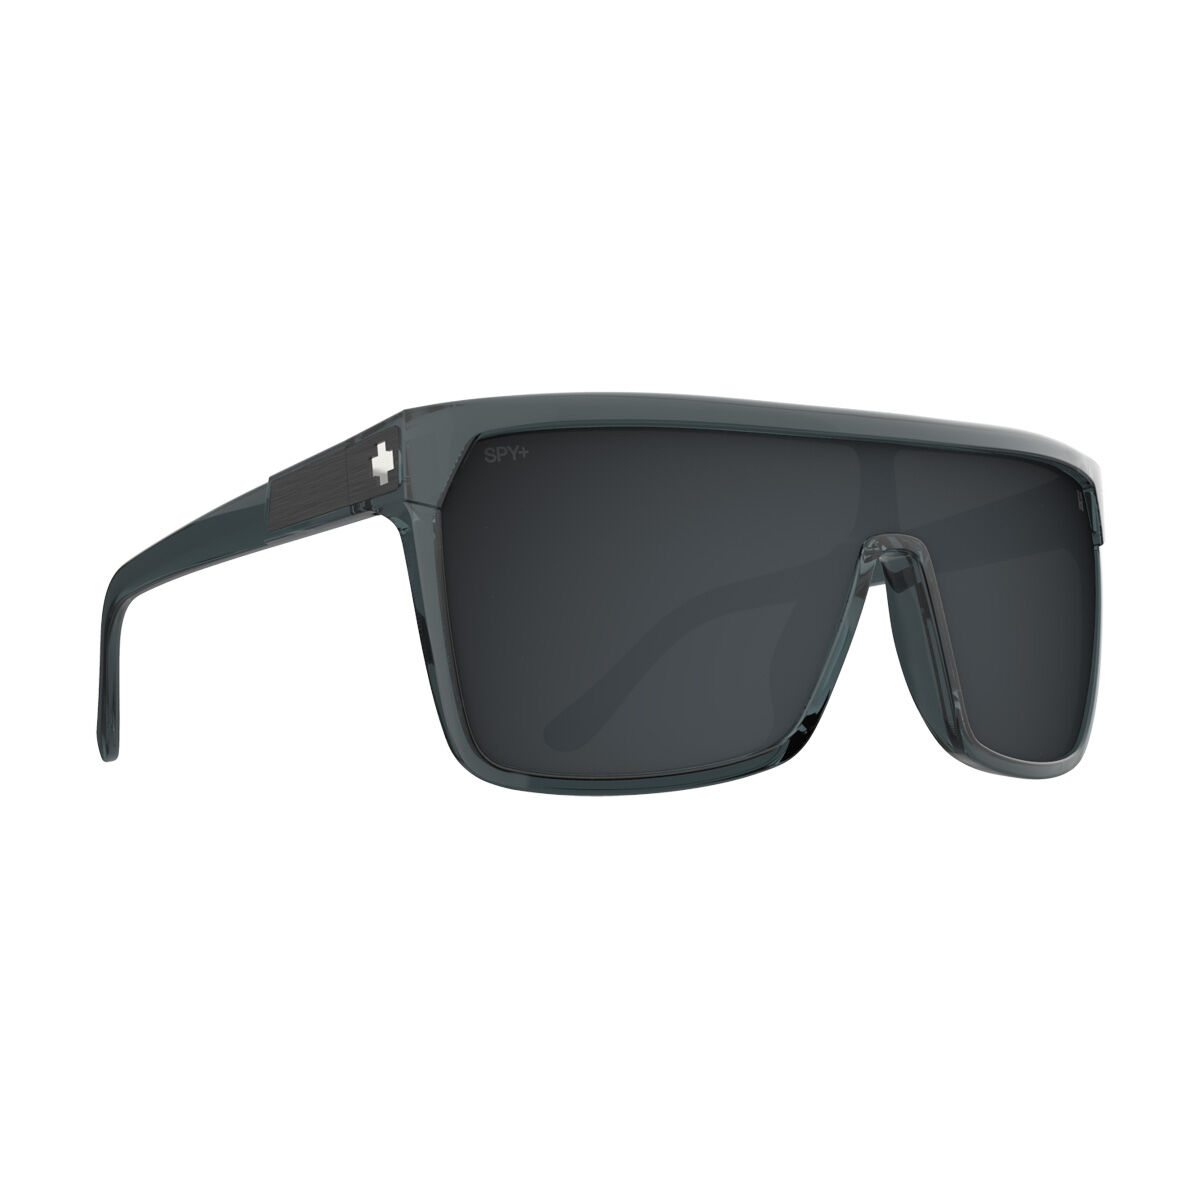 SPY Optic | Sunglasses & Goggles for Men, Women & Kids